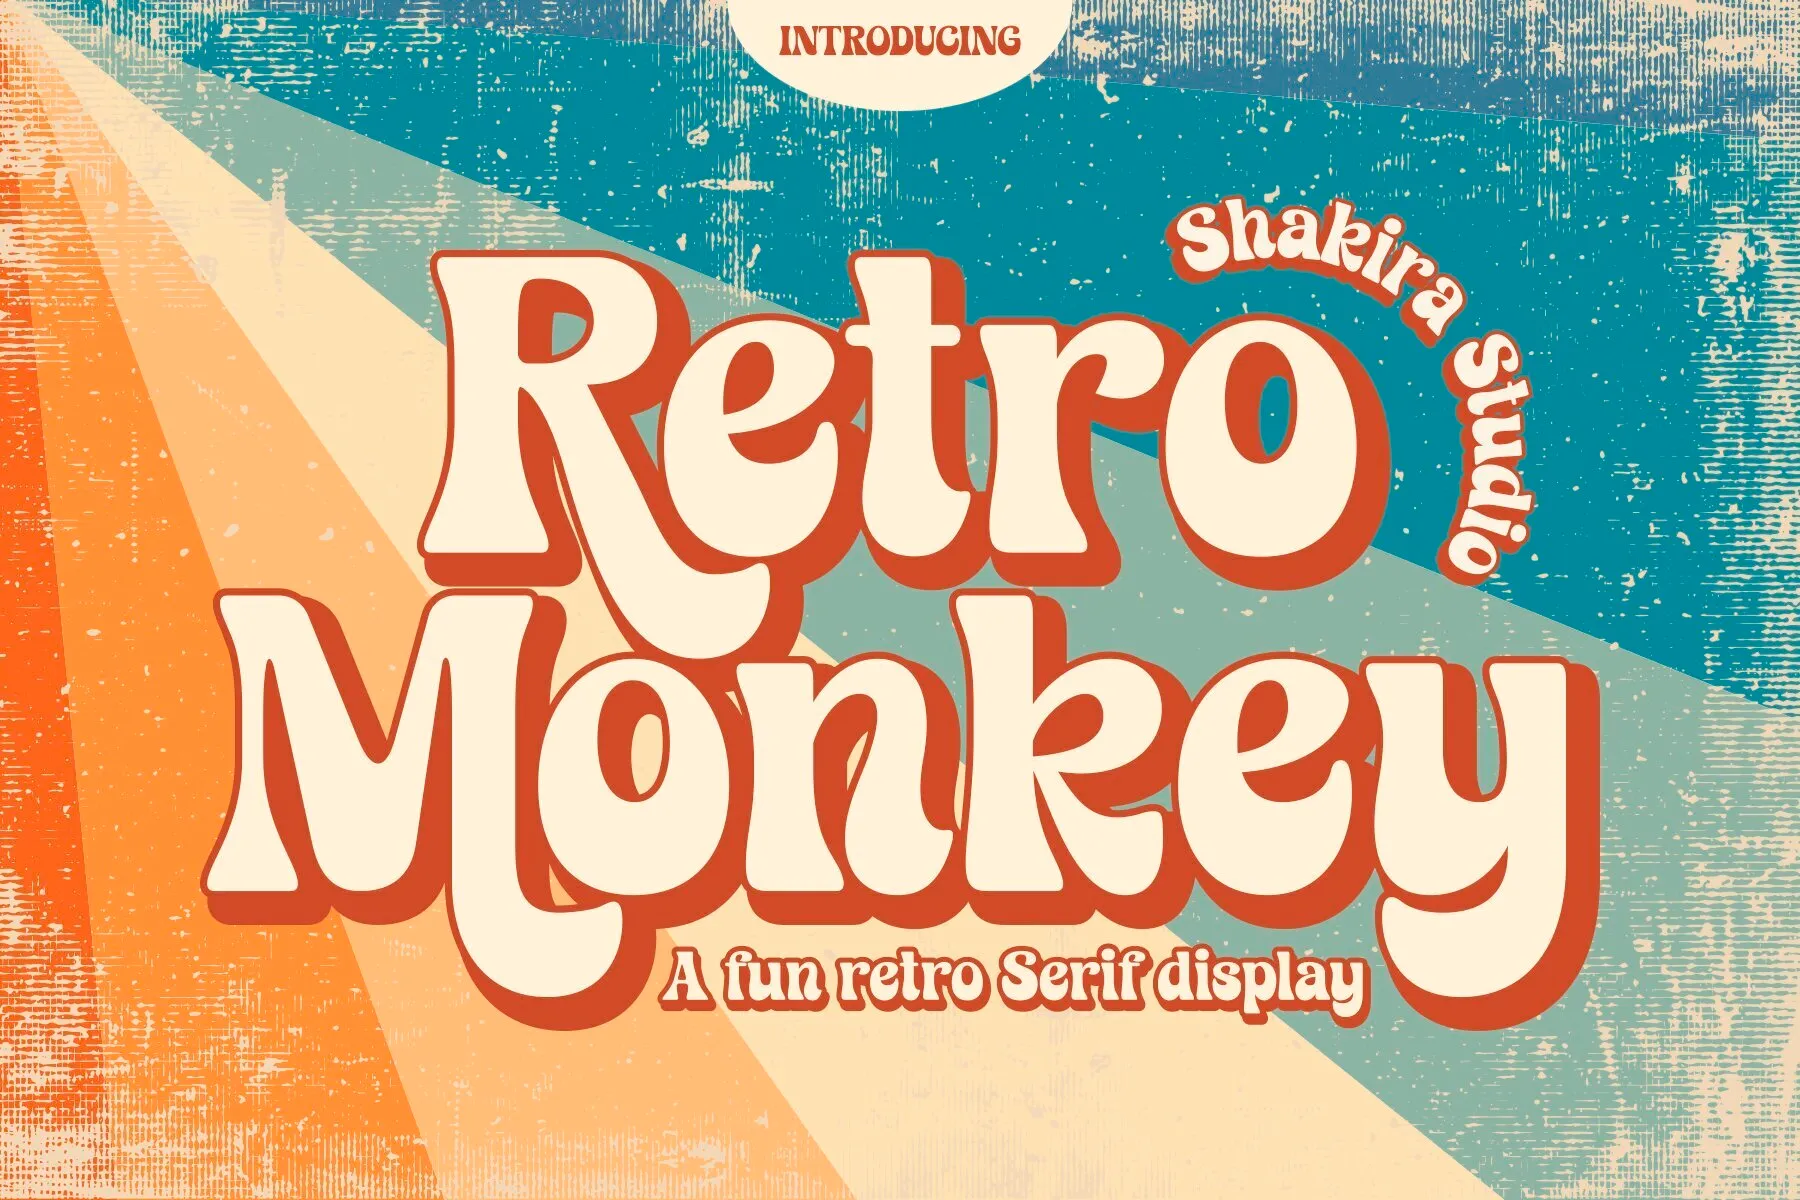 Retro Monkey